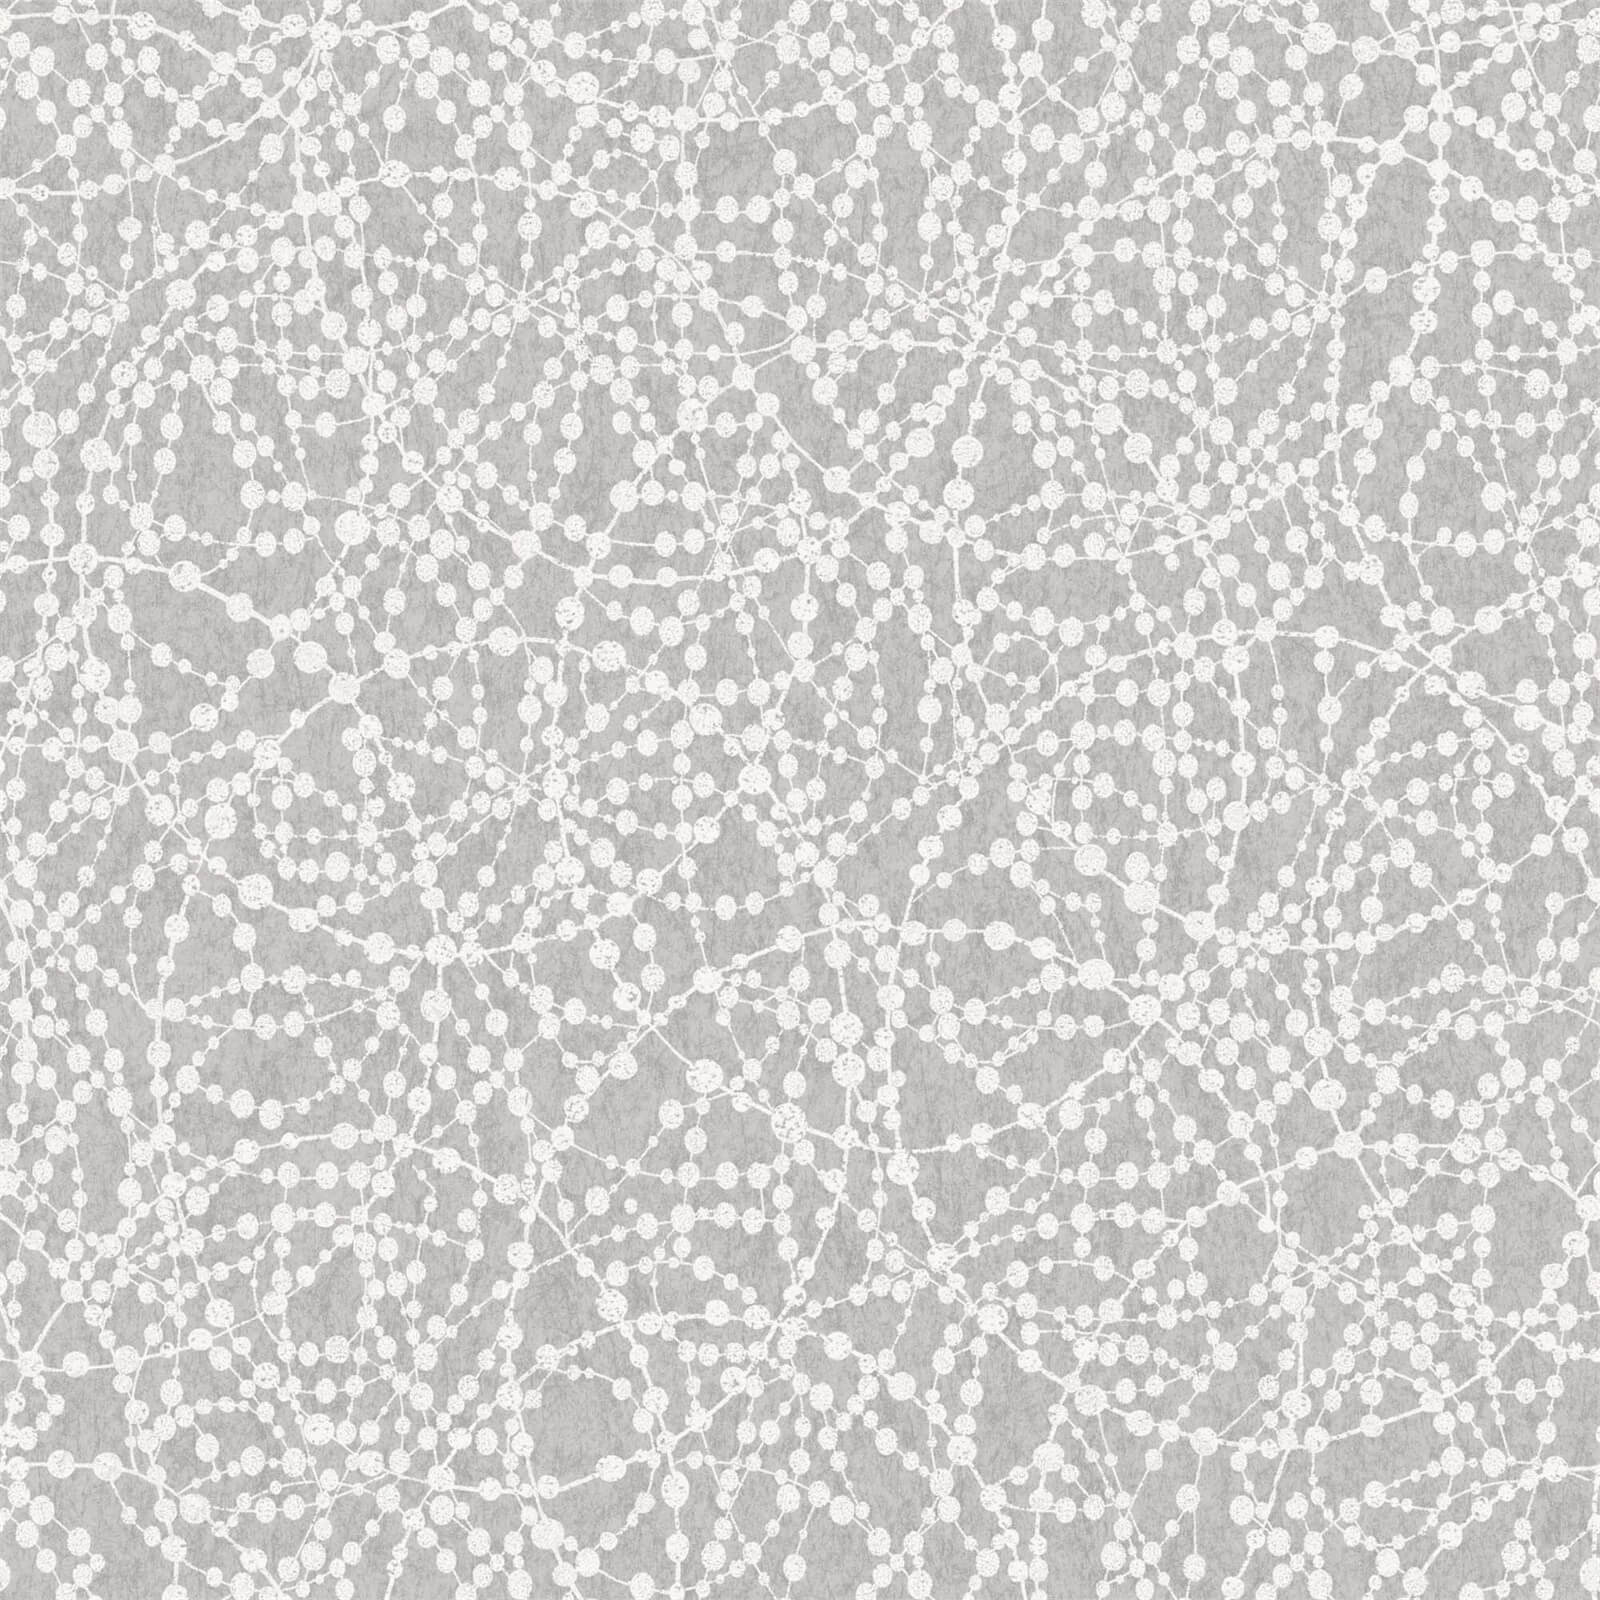 Holden Decor Eclipse Geometric Textured Metallic Glitter Grey Wallpaper